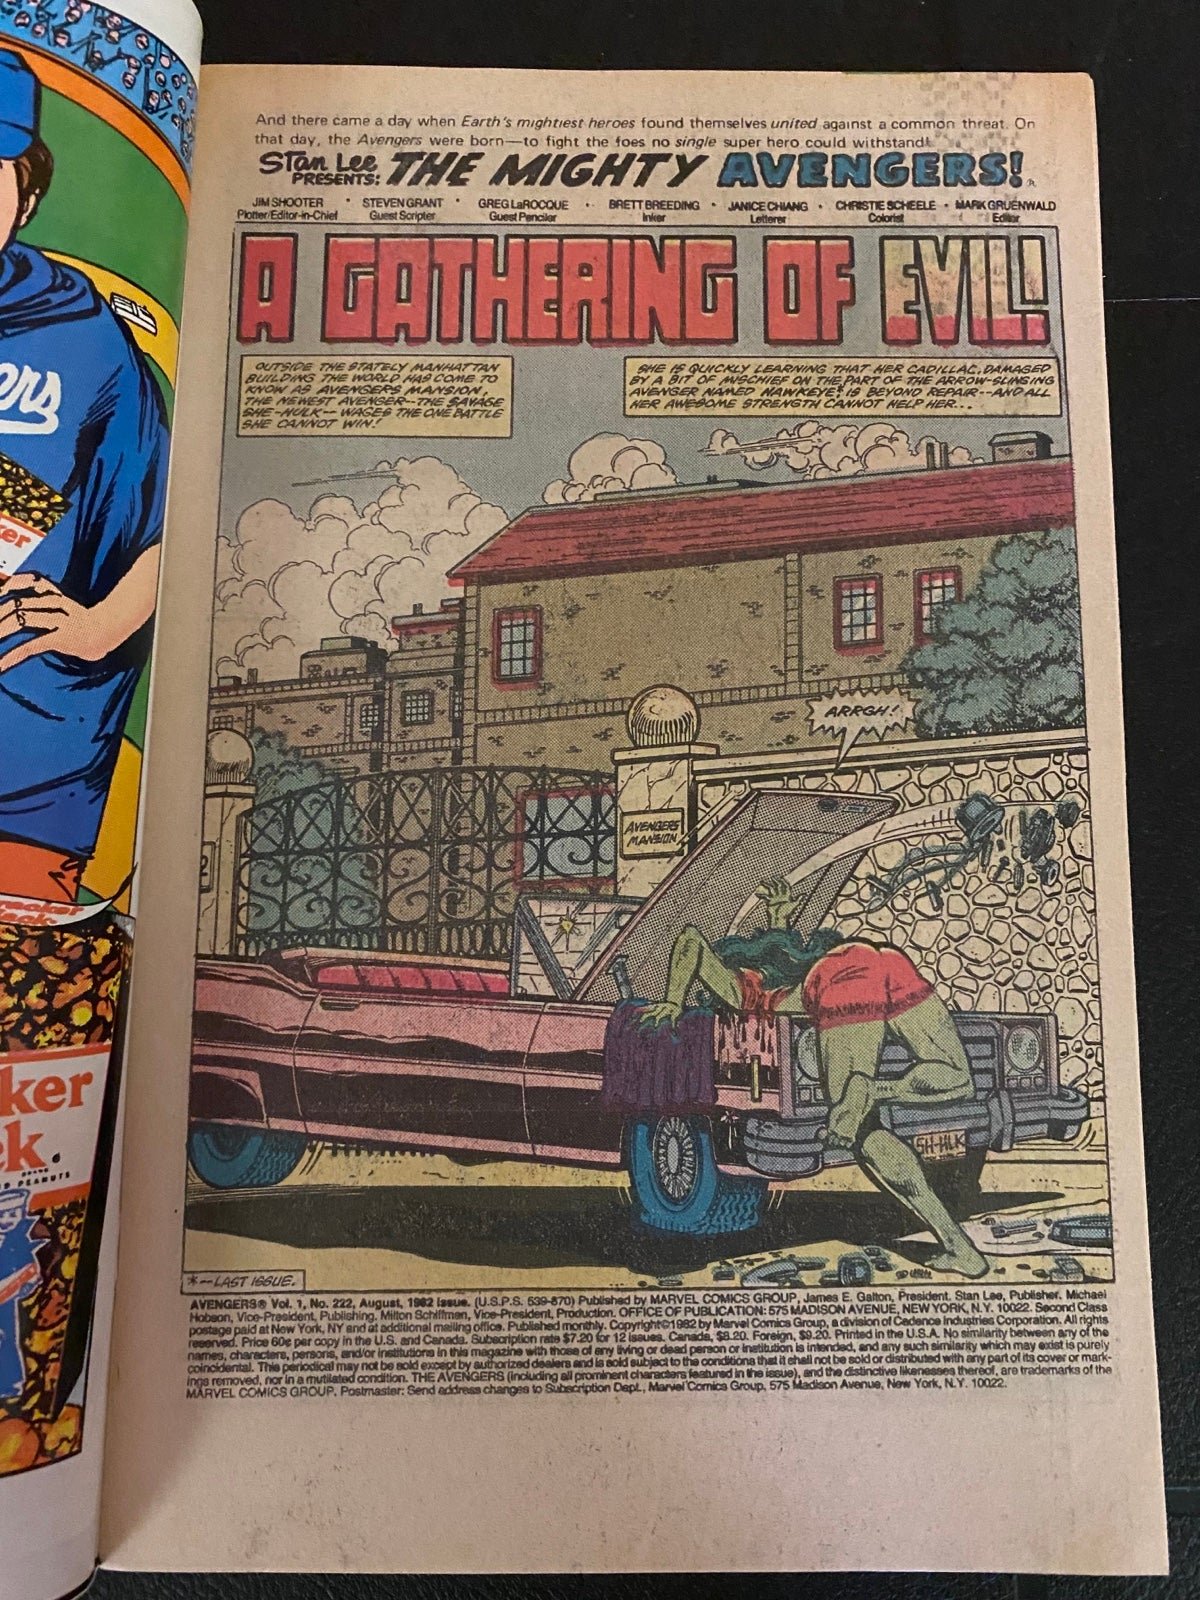 The Avengers #222 Marvel Comics 1982 VF- 1st Appearance Of New Masters Of Evil CEHuRxoSz